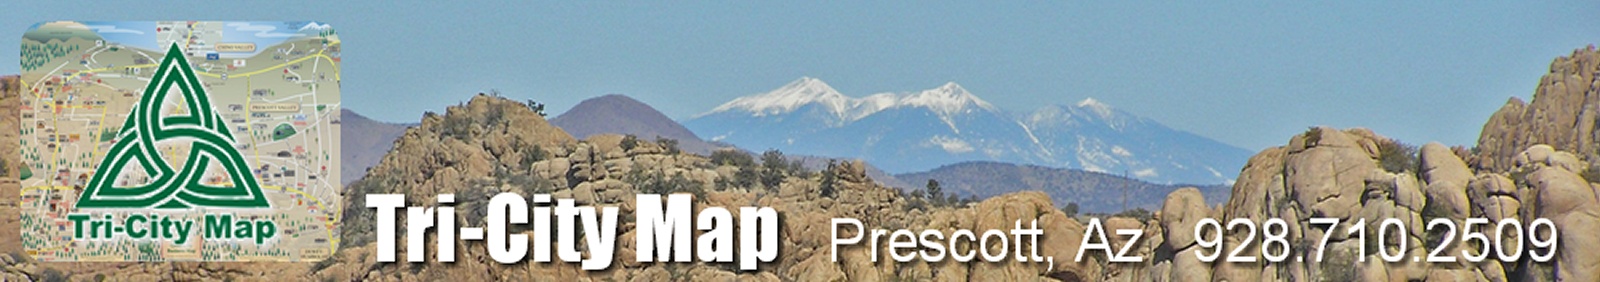 Our Local Links Resource Info - Tri-City Map, LLC. - Prescott, Arizona